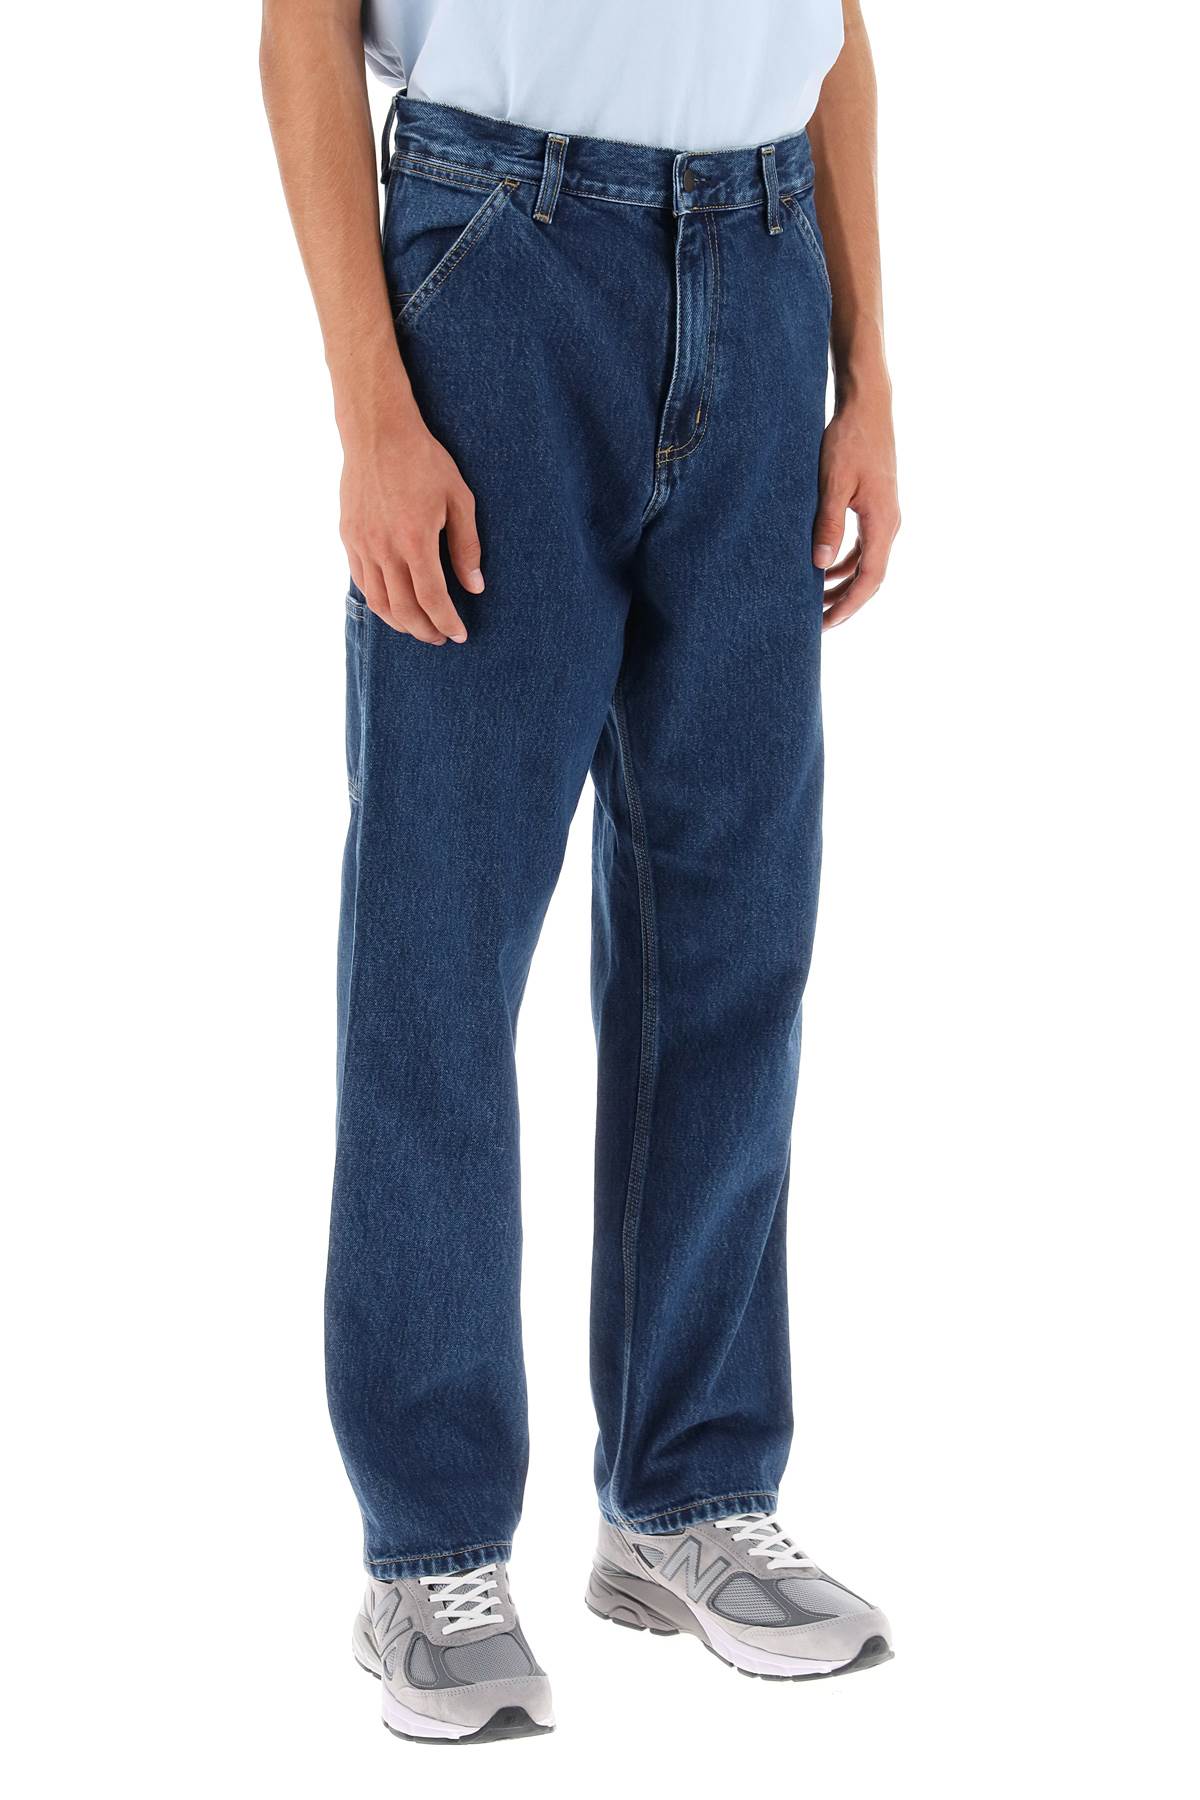 Carhartt wip 'smith' cargo jeans-men > clothing > jeans > jeans-Carhartt Wip-30-Blue-Urbanheer